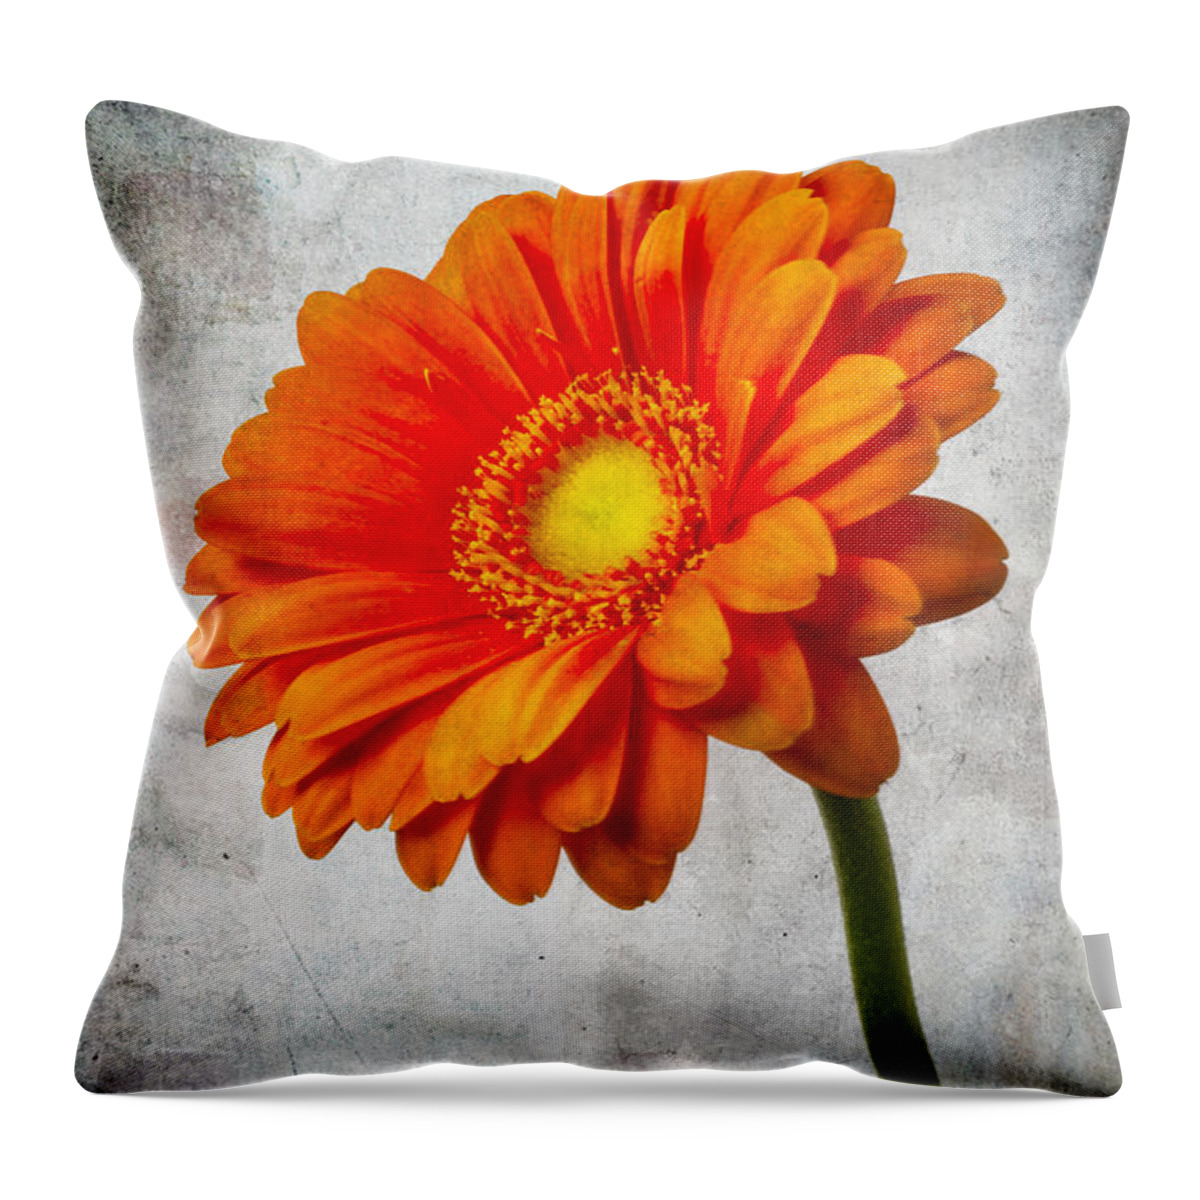 Gerbera Throw Pillow featuring the photograph Mini Gerbera Orange Daisy by Garry Gay